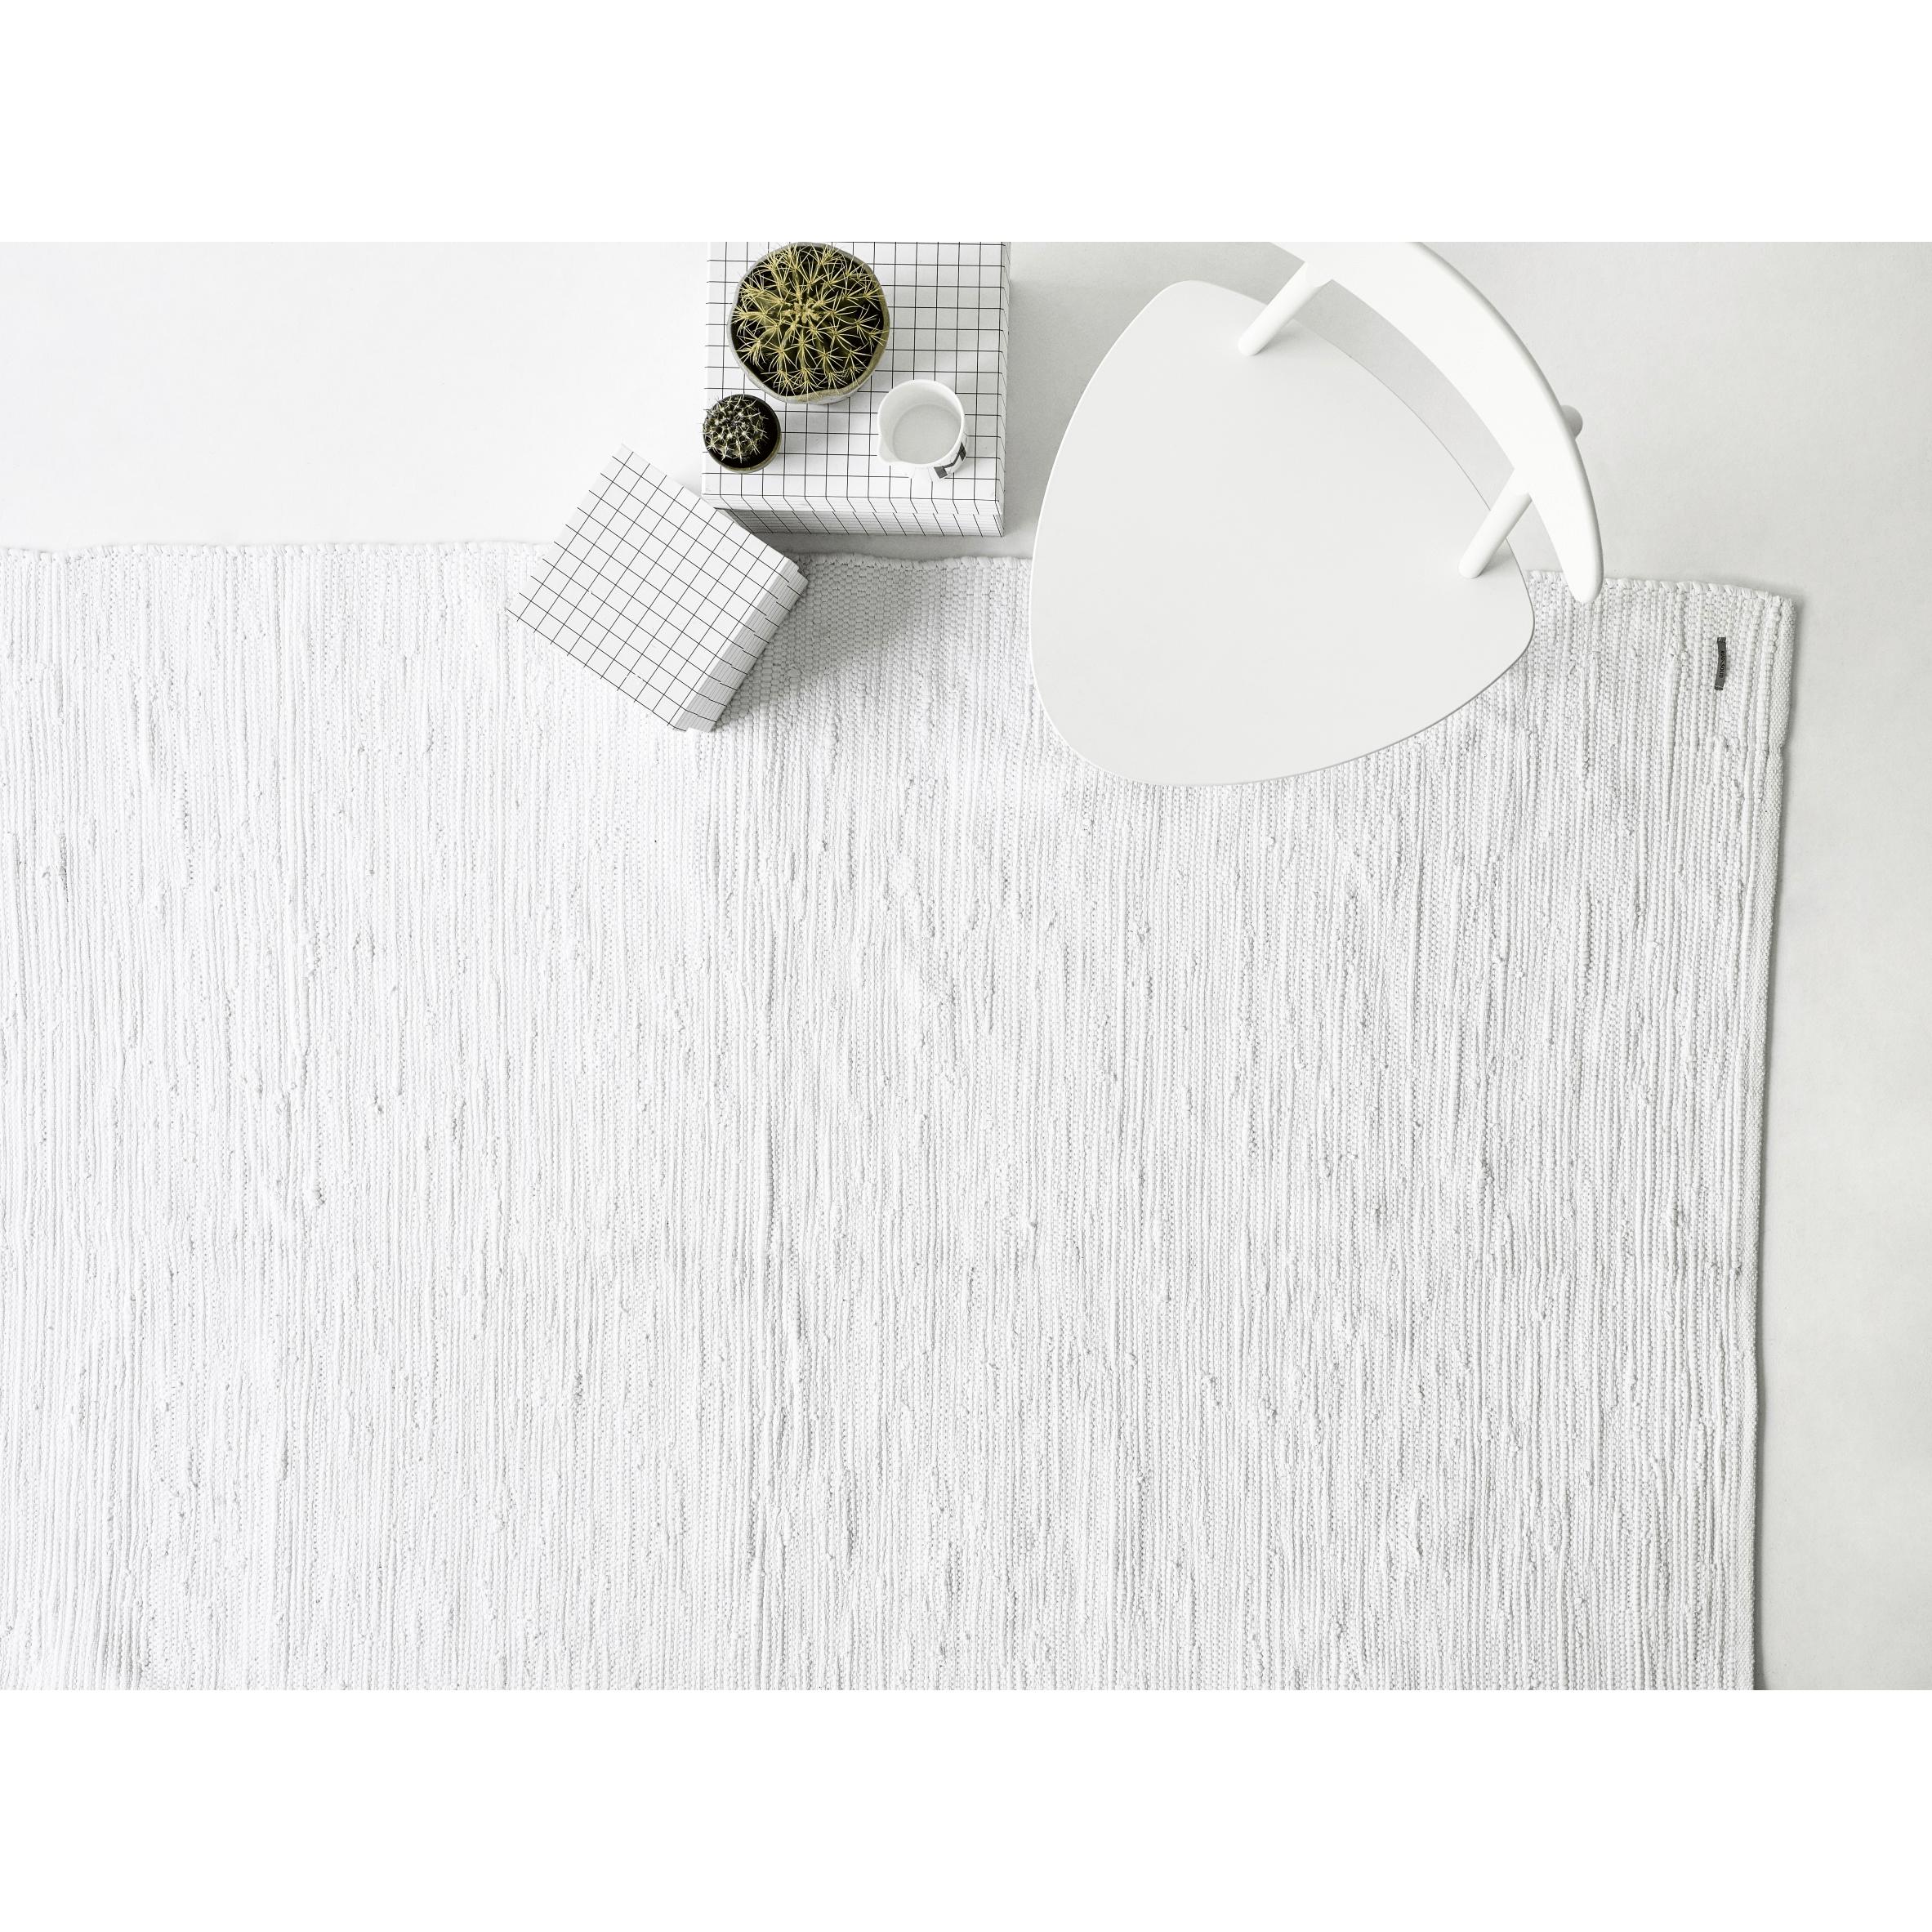 Teppet solid bomulls teppe hvit, 170 x 240 cm